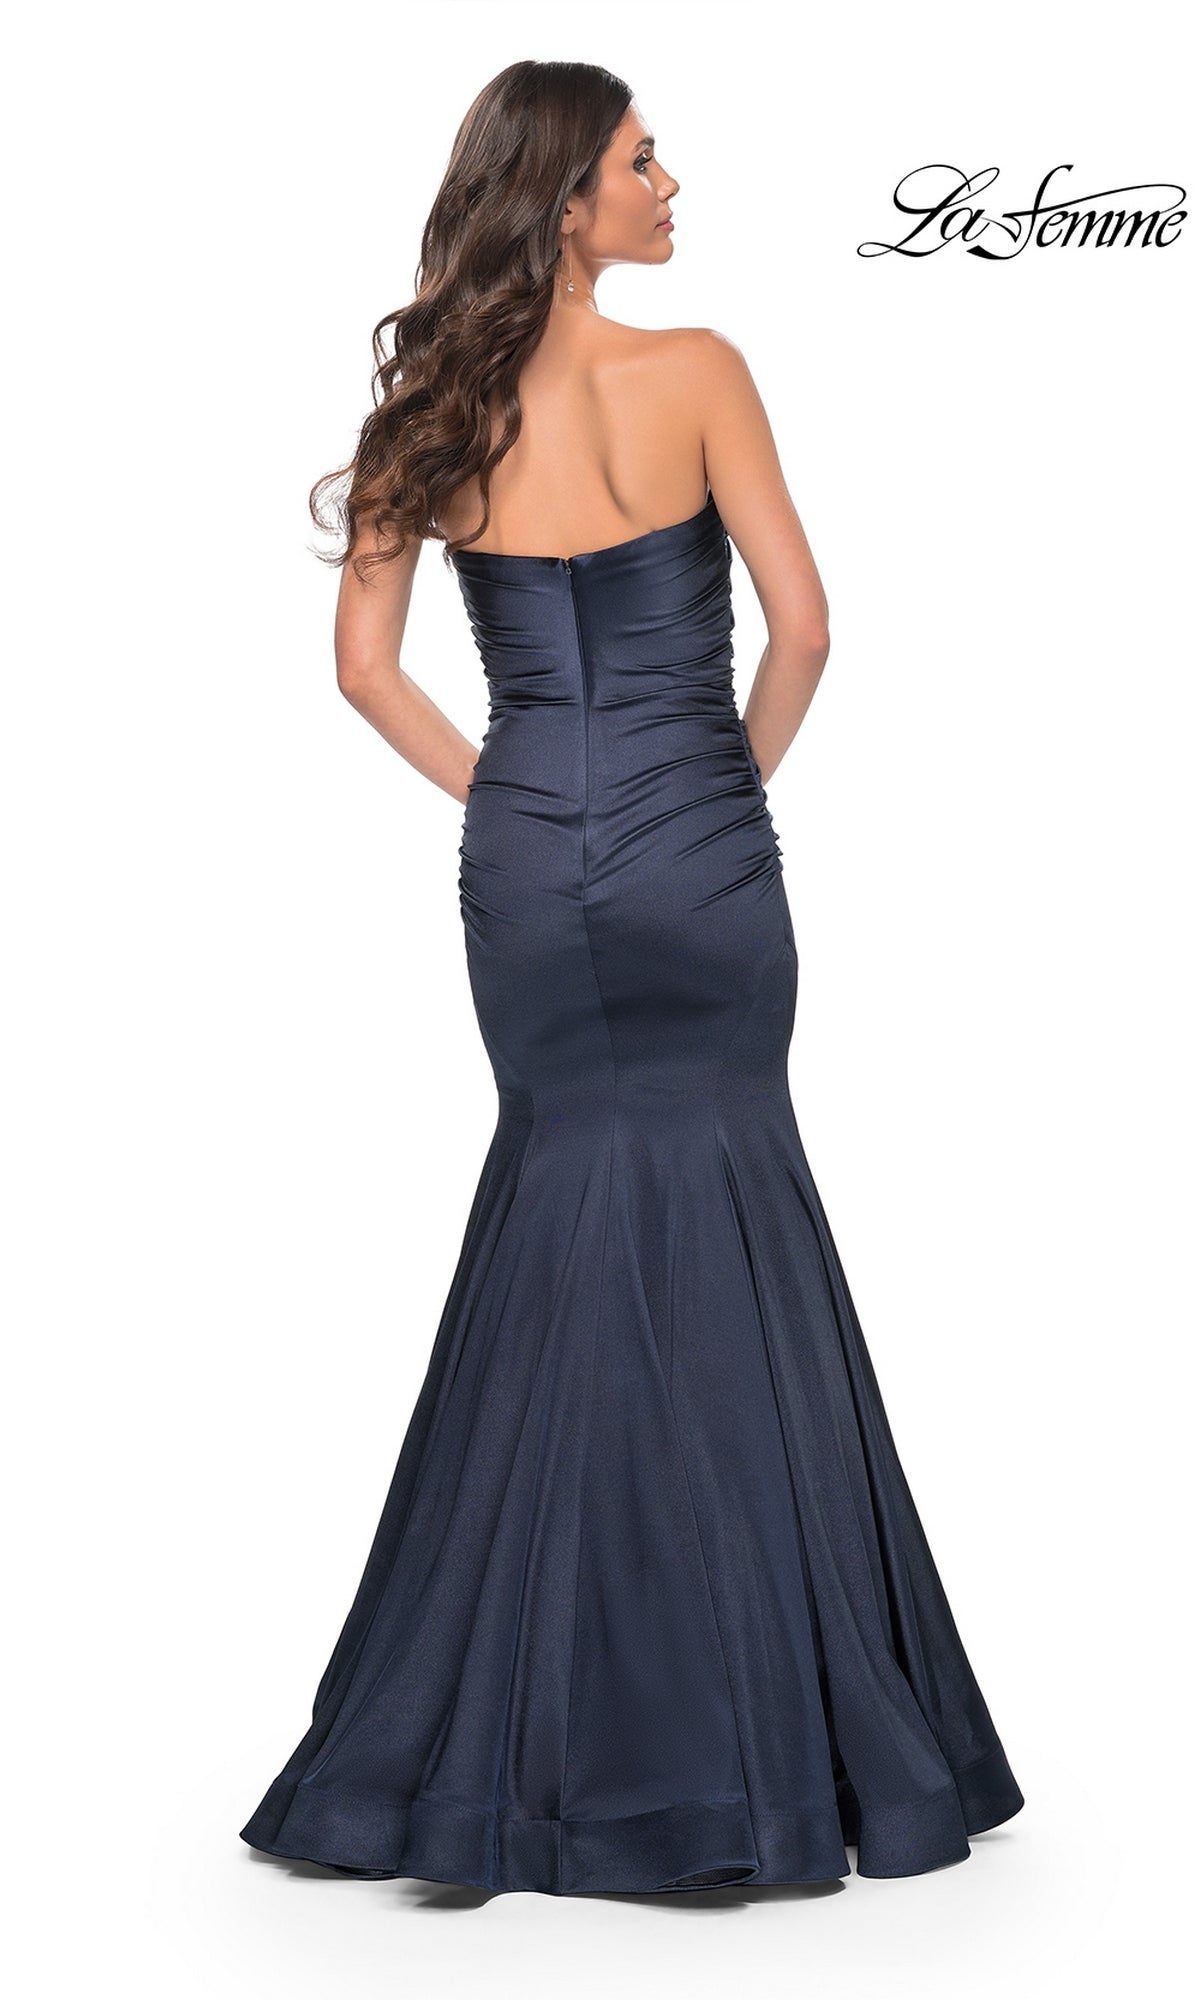  La Femme 31980 Formal Prom Dress